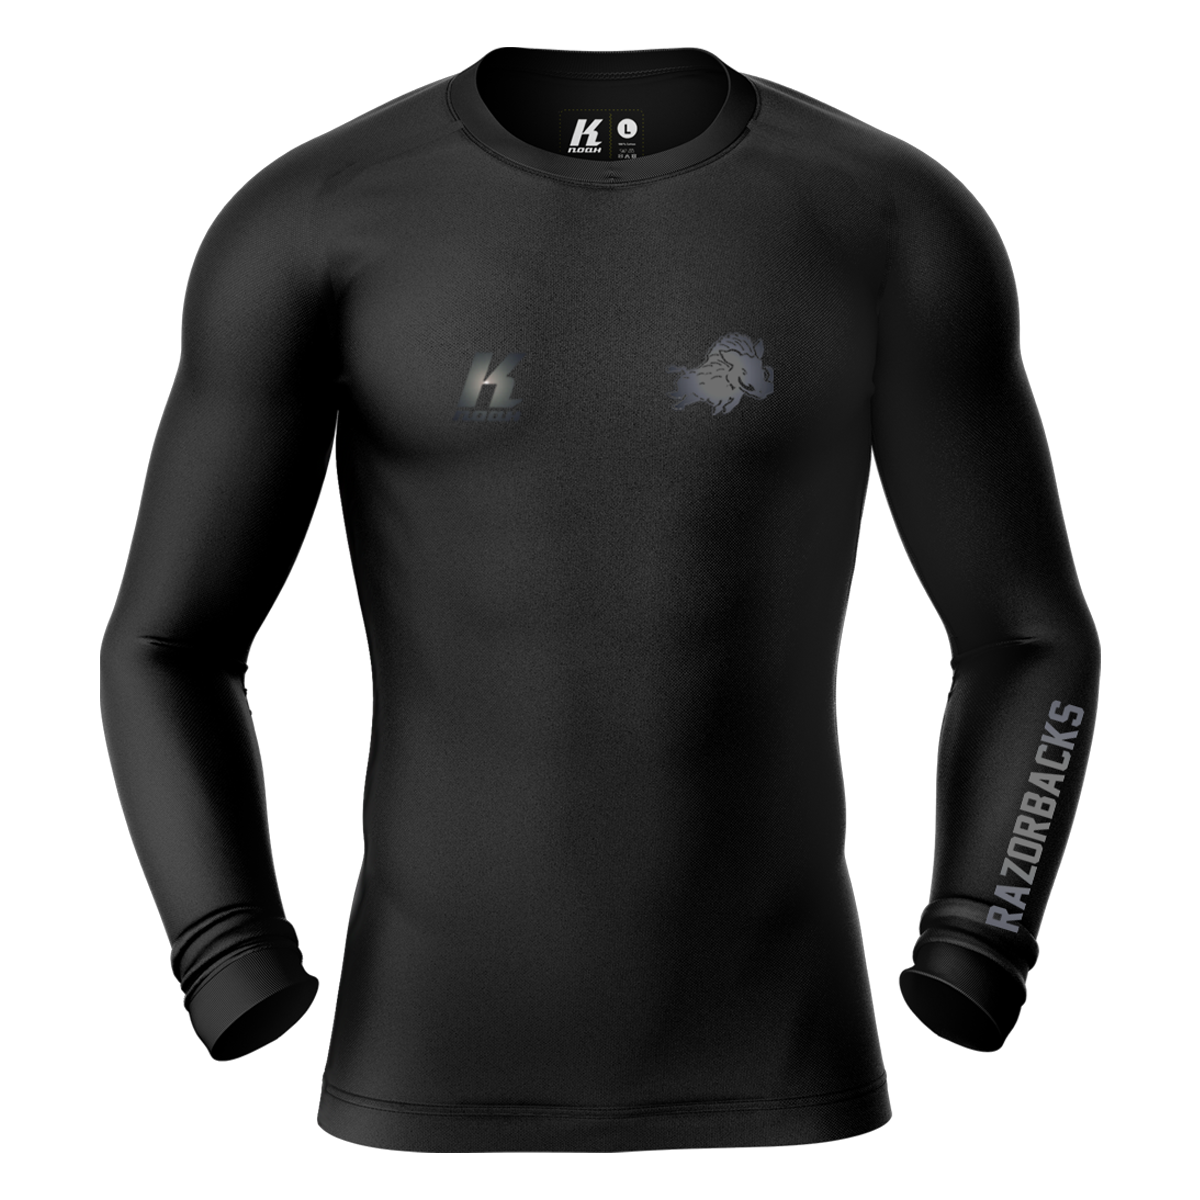 Razorbacks "Blackline" K.Tech Compression Longsleeve Shirt